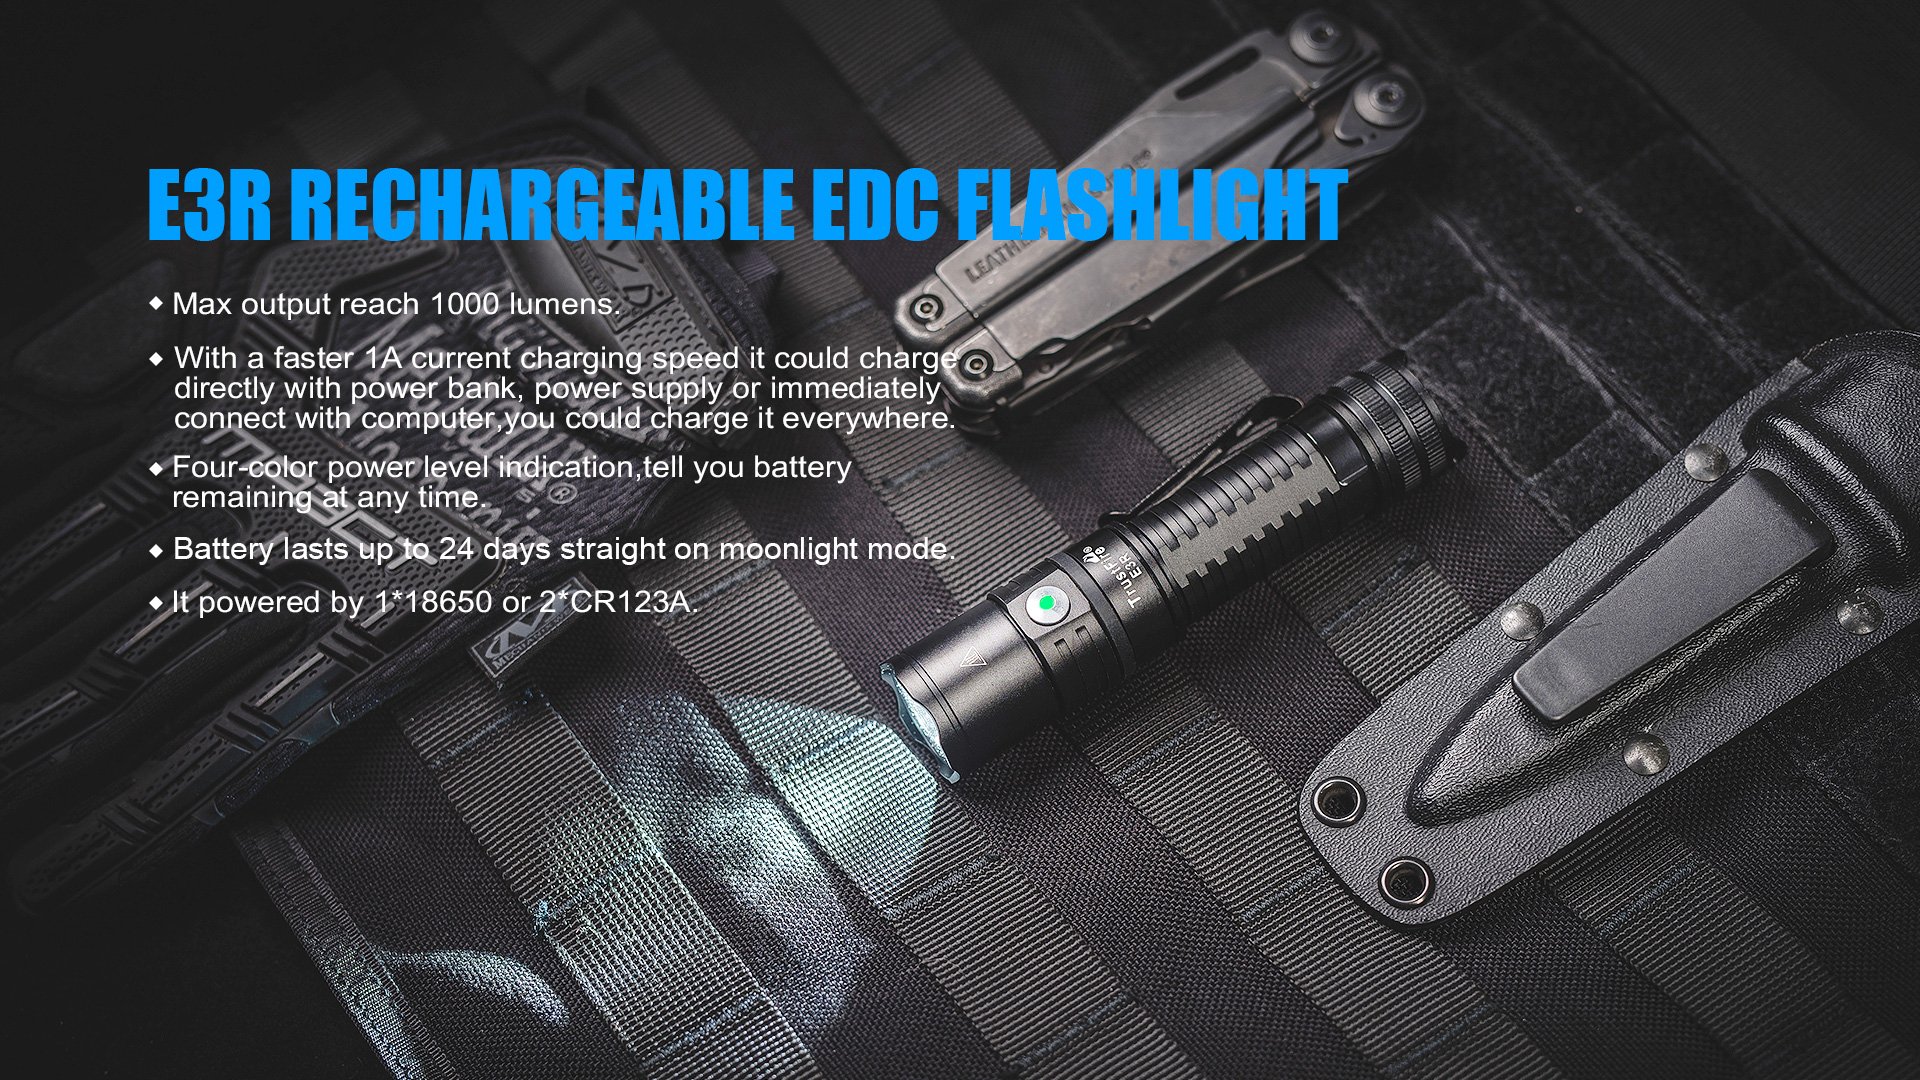 Trustfire E3R Rechargeable EDC Flashlight